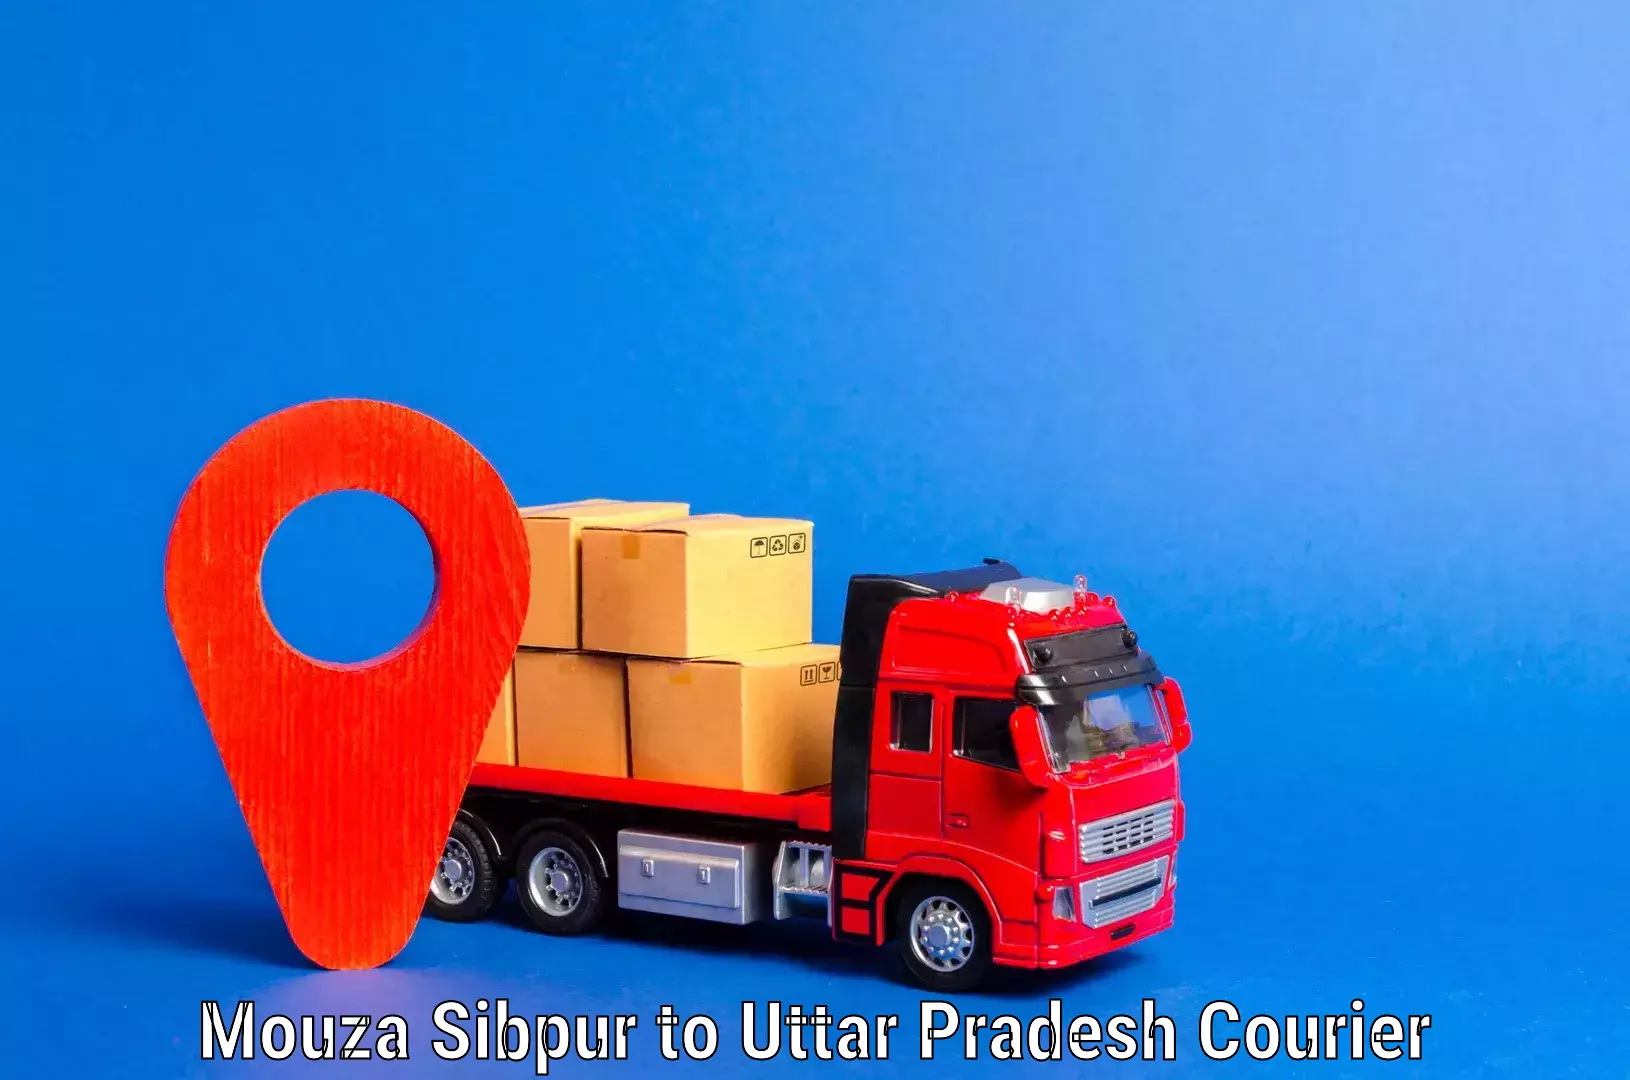 Budget-friendly movers Mouza Sibpur to Uttar Pradesh